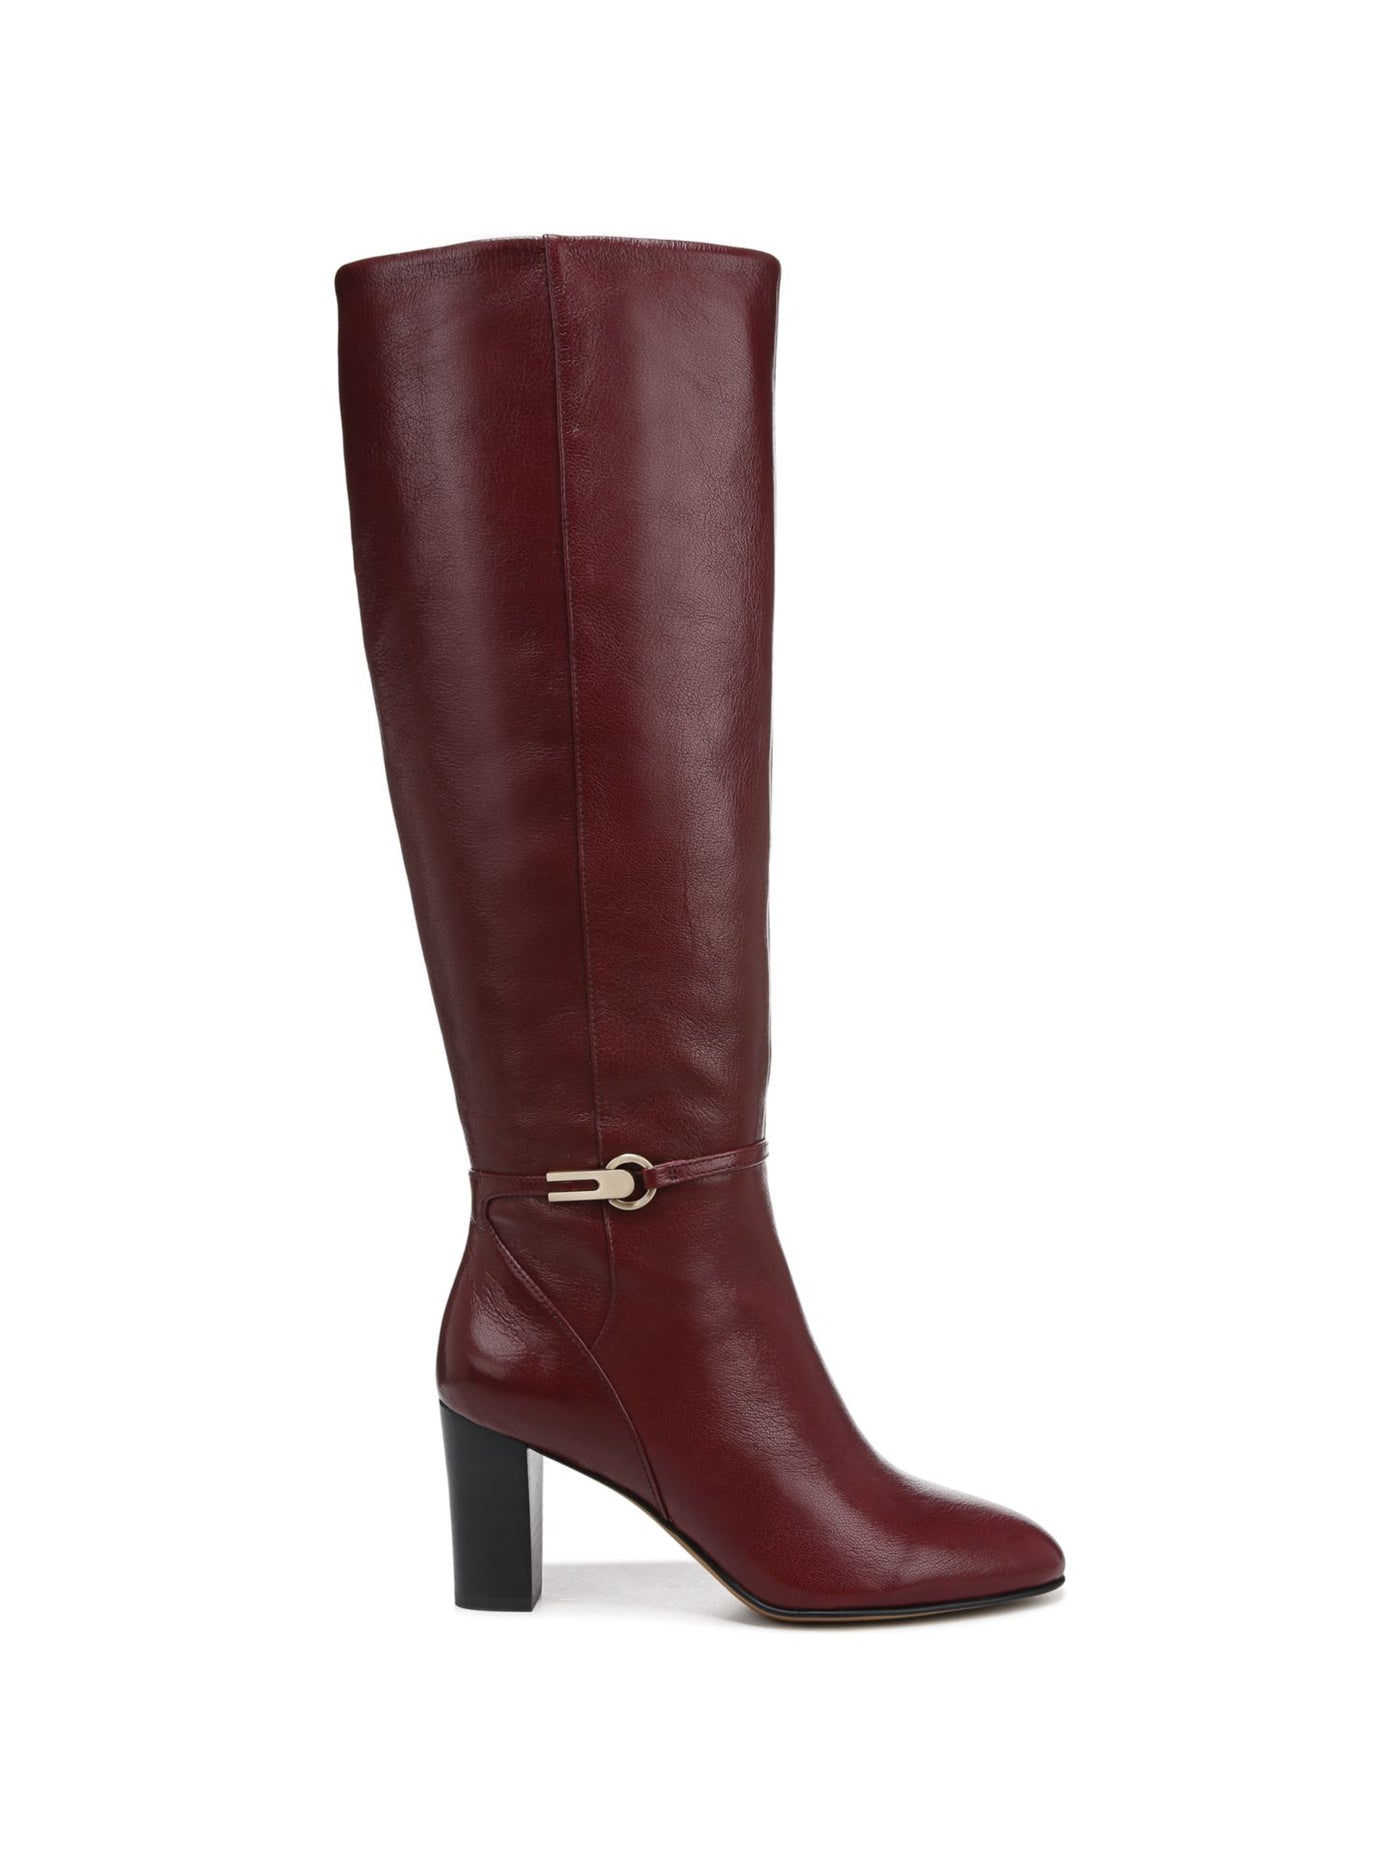 FRANCO SARTO Womens Burgundy Metallic Hardware Palermo Almond Toe Zip-Up Leather Dress Boots 7.5 M